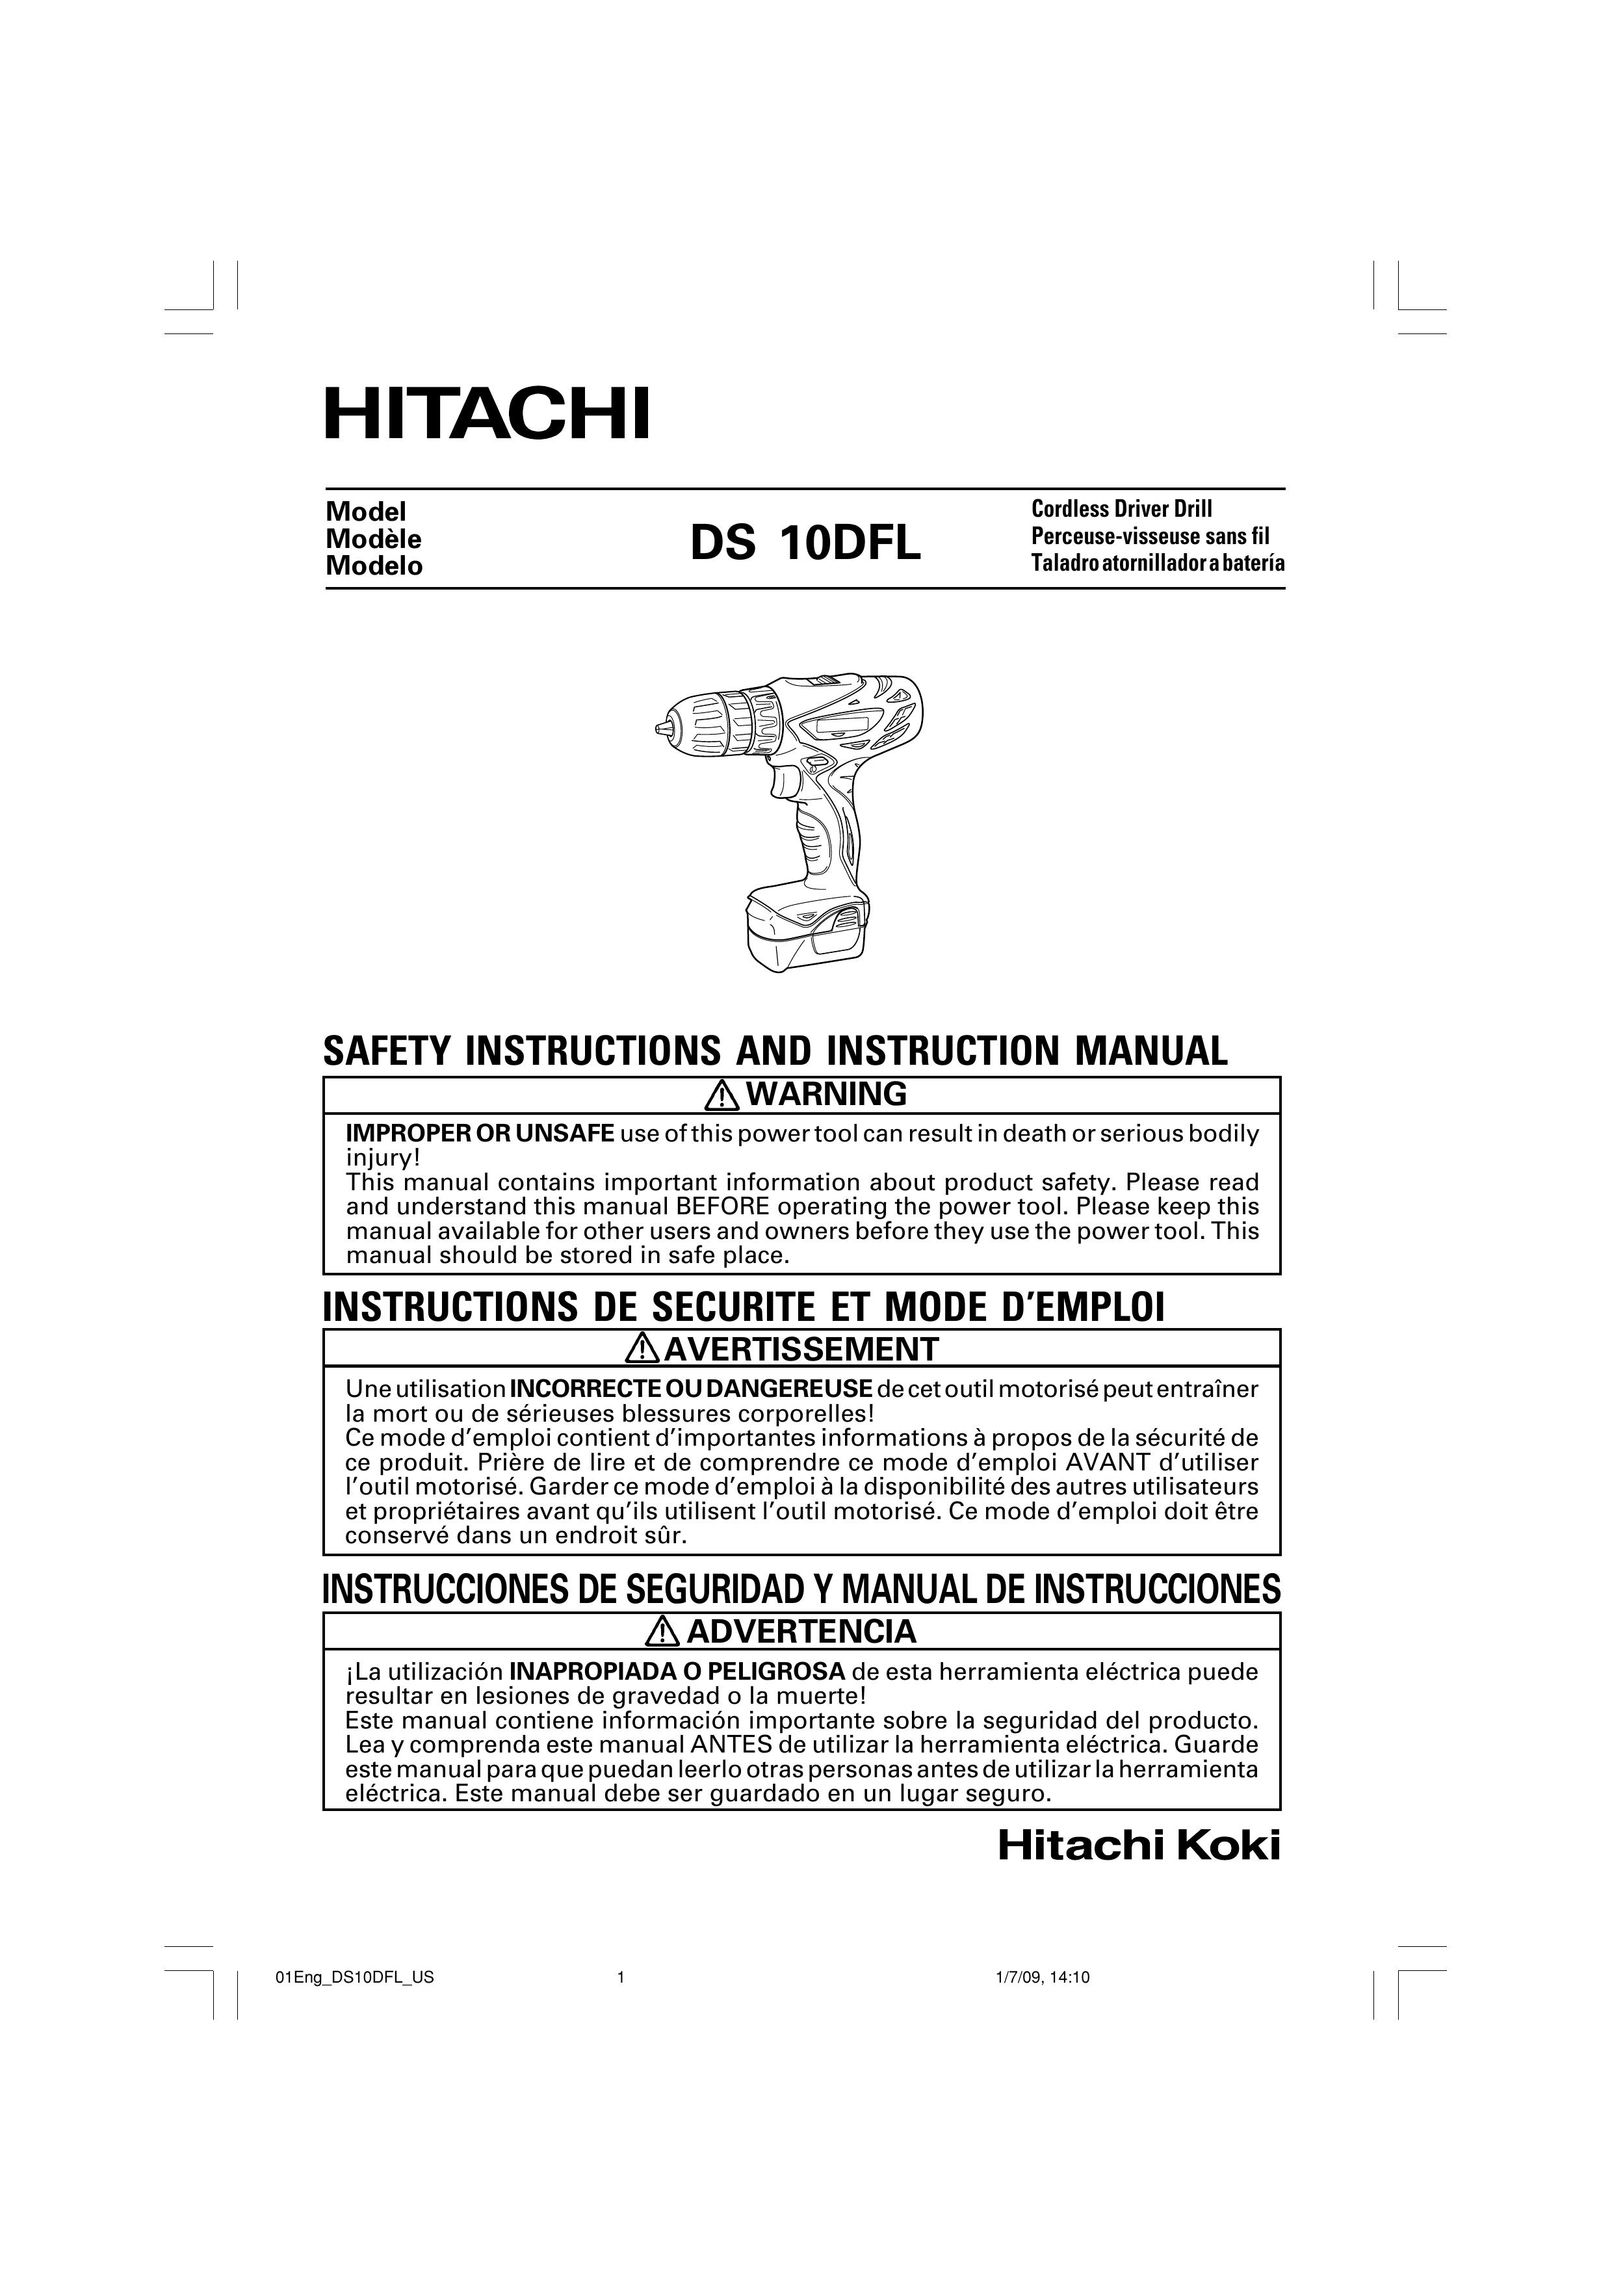 Hitachi DS 10DFL Cordless Drill User Manual